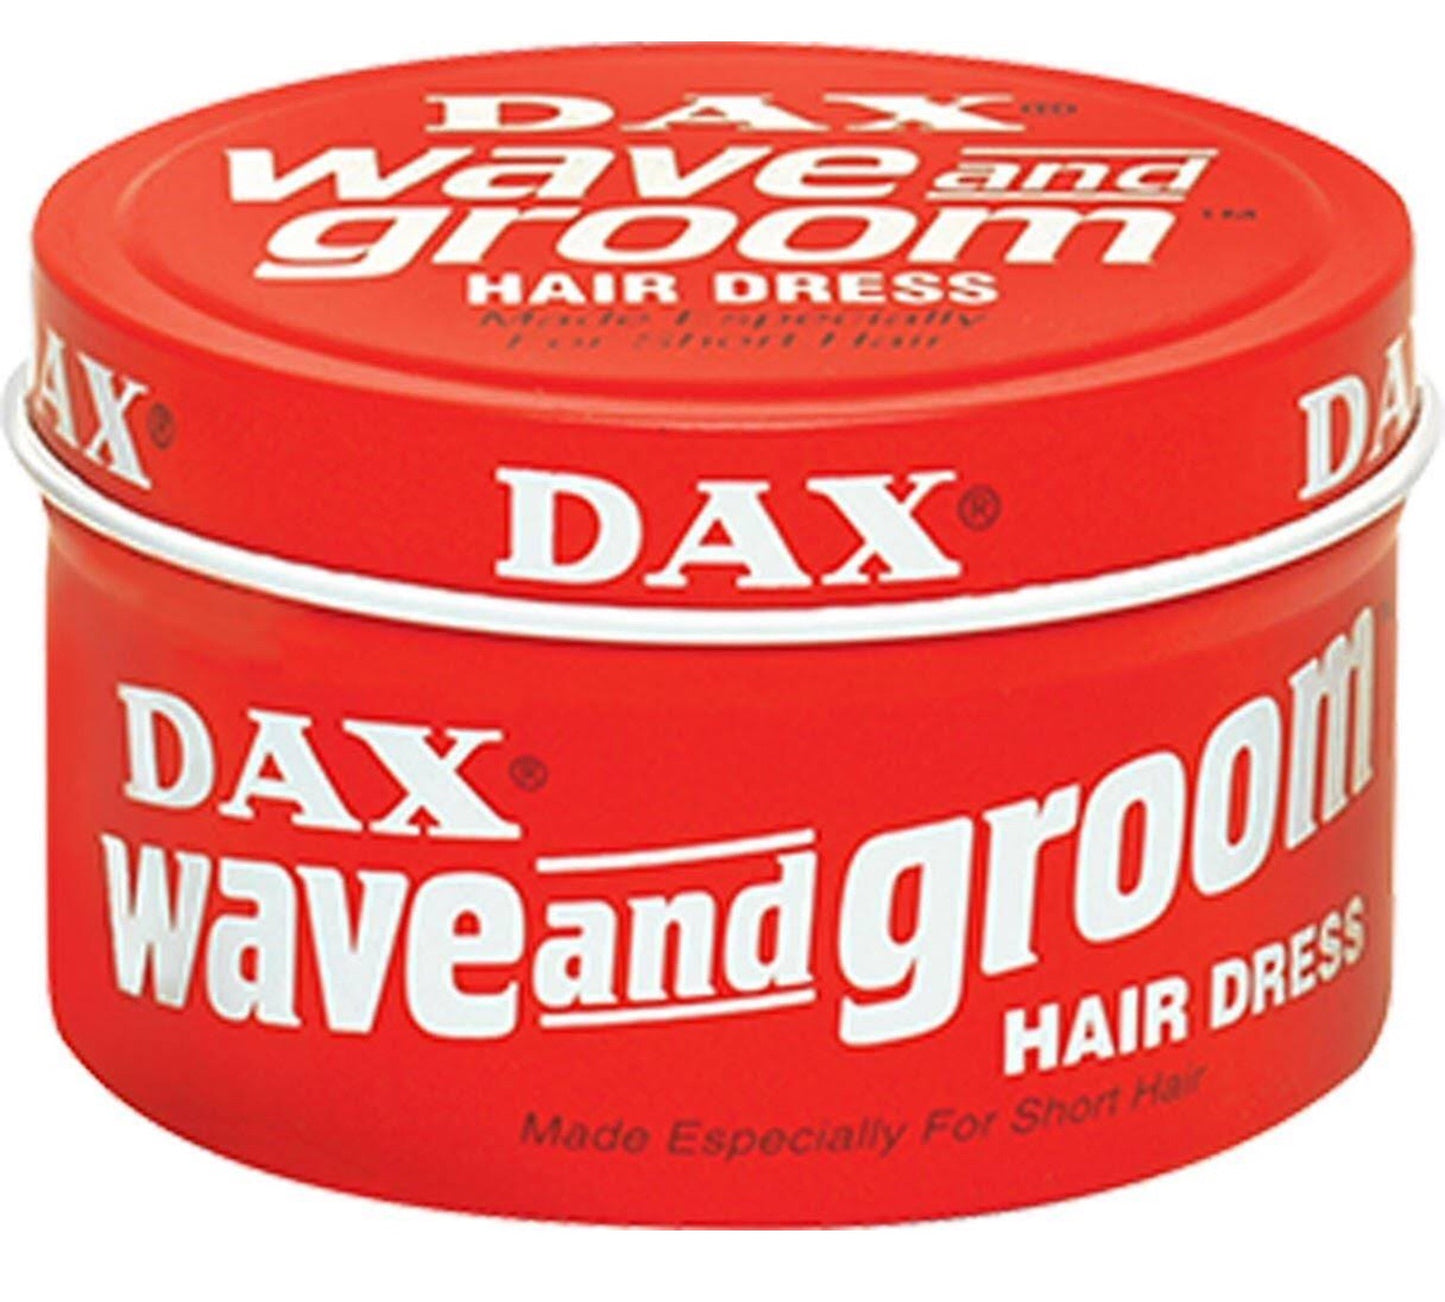 DAX Wave & Groom Hair Dress